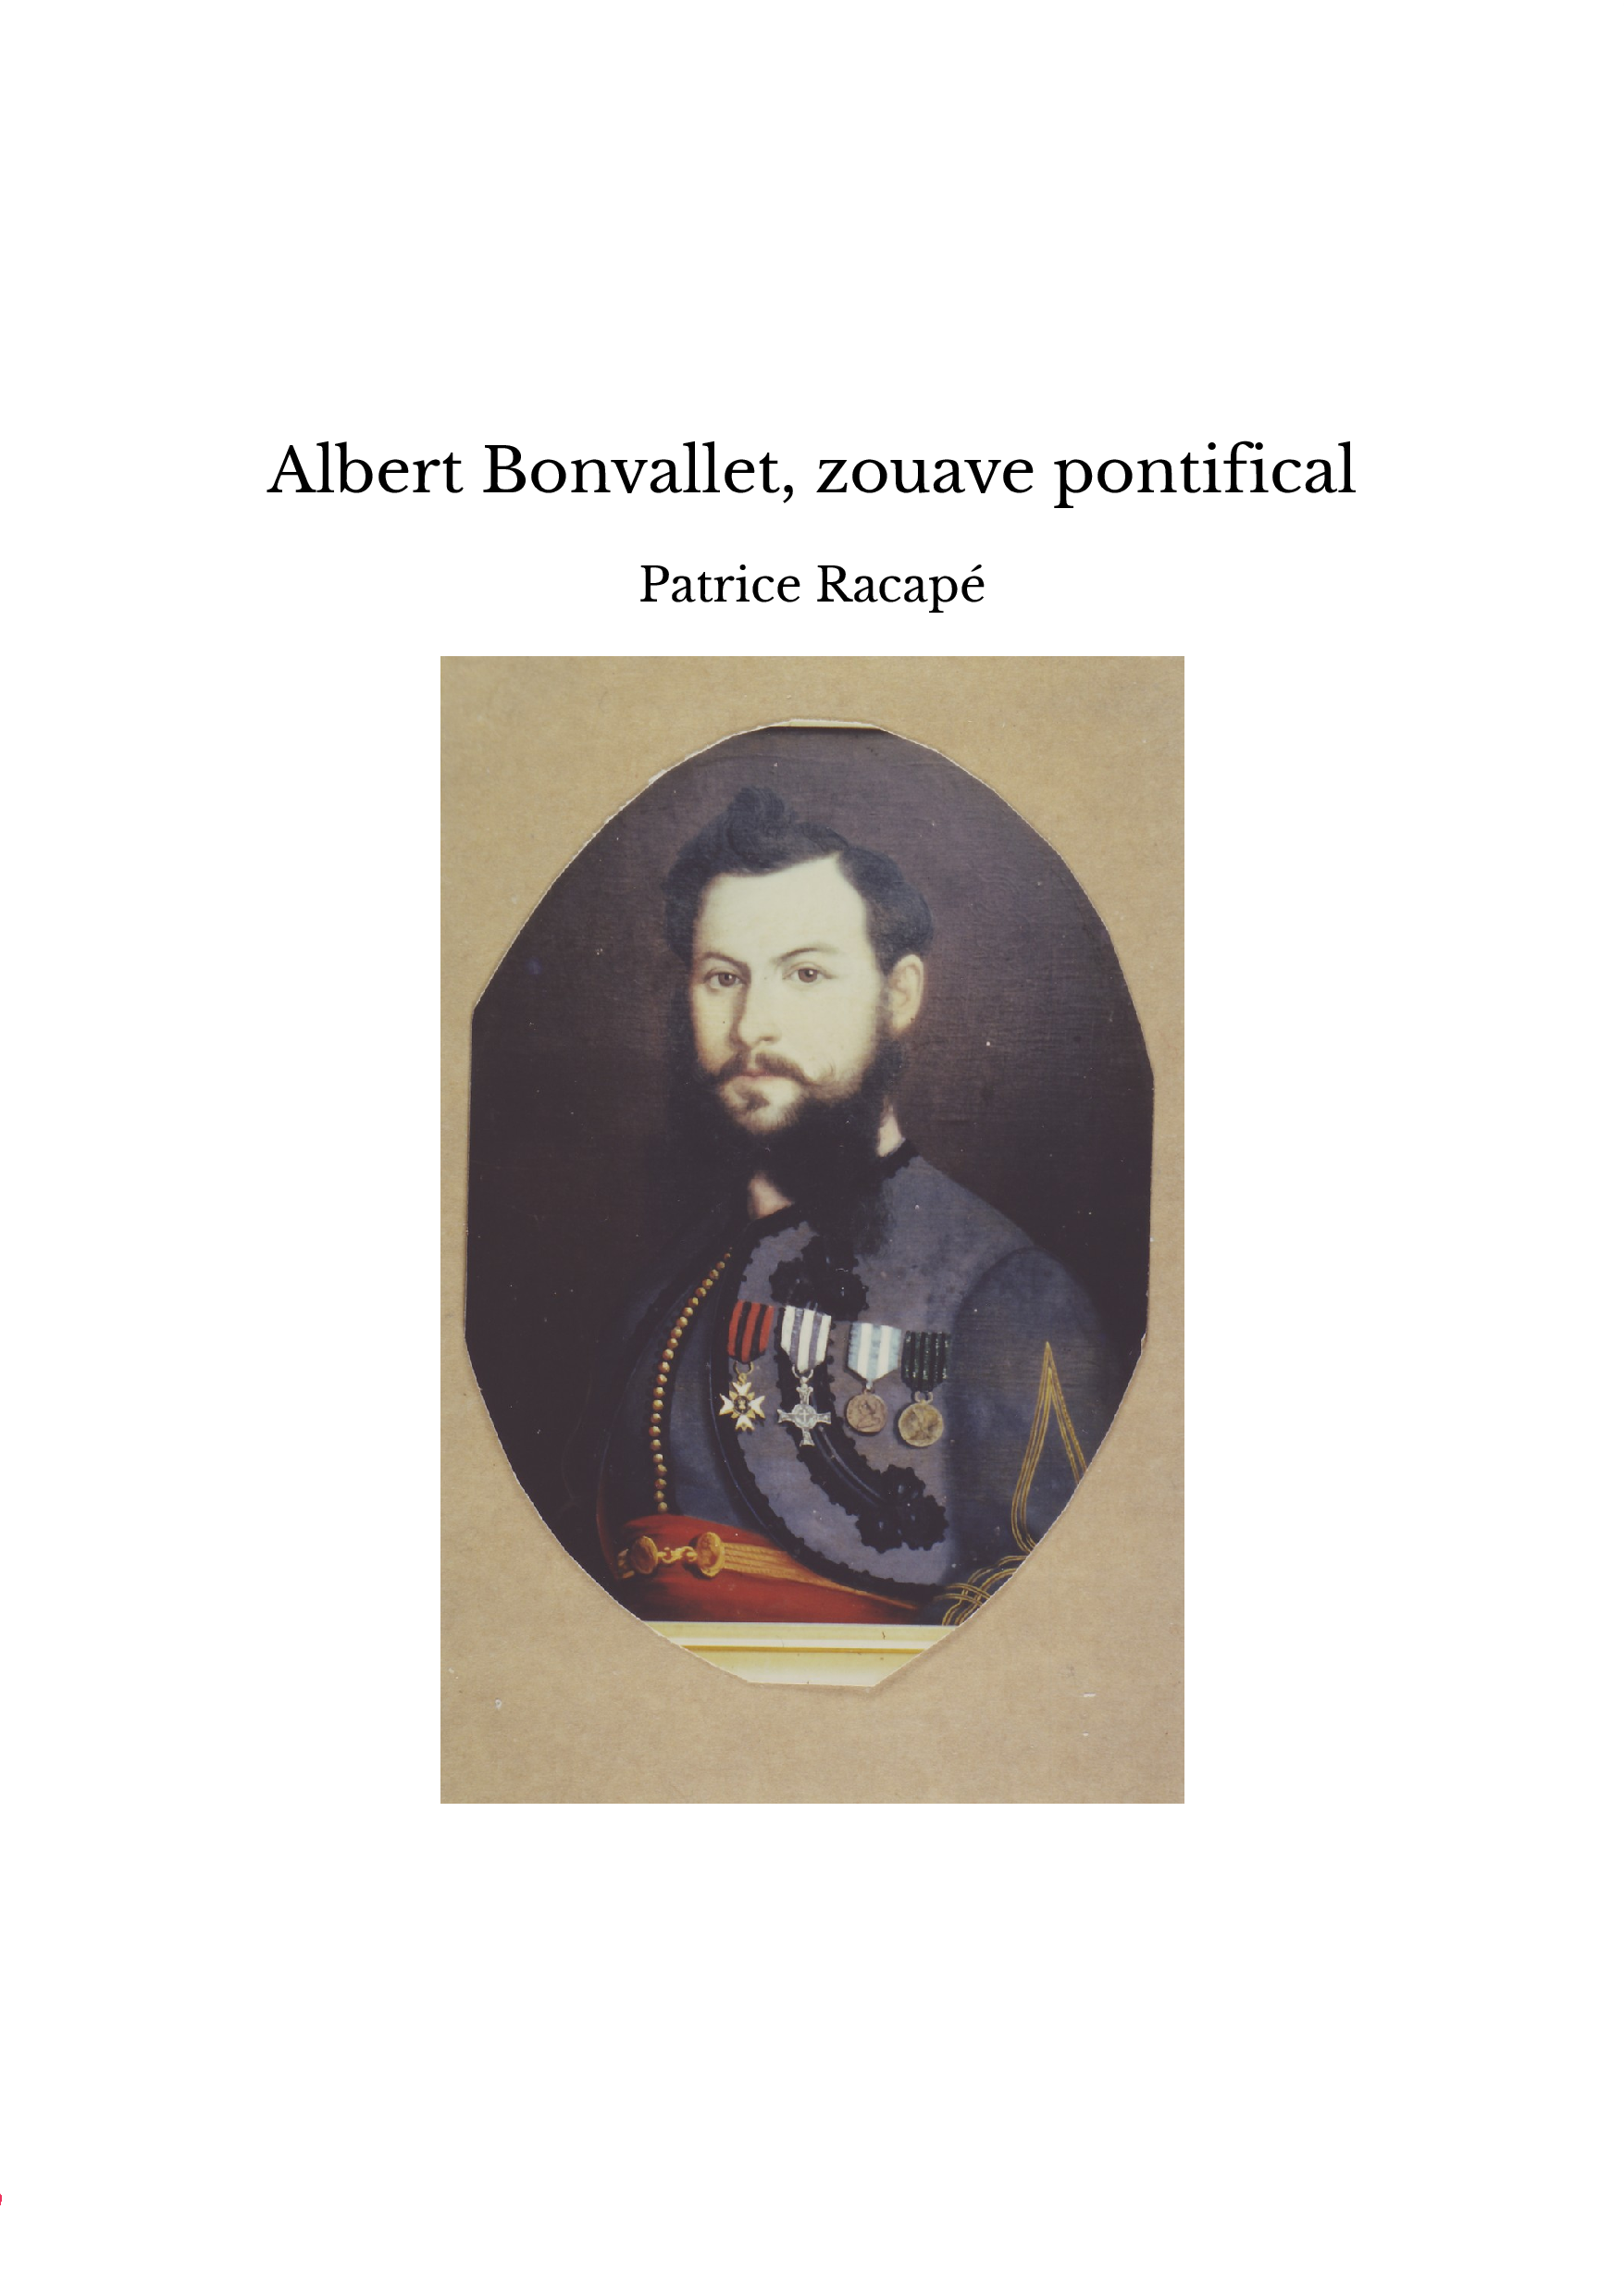 Albert Bonvallet, zouave pontifical